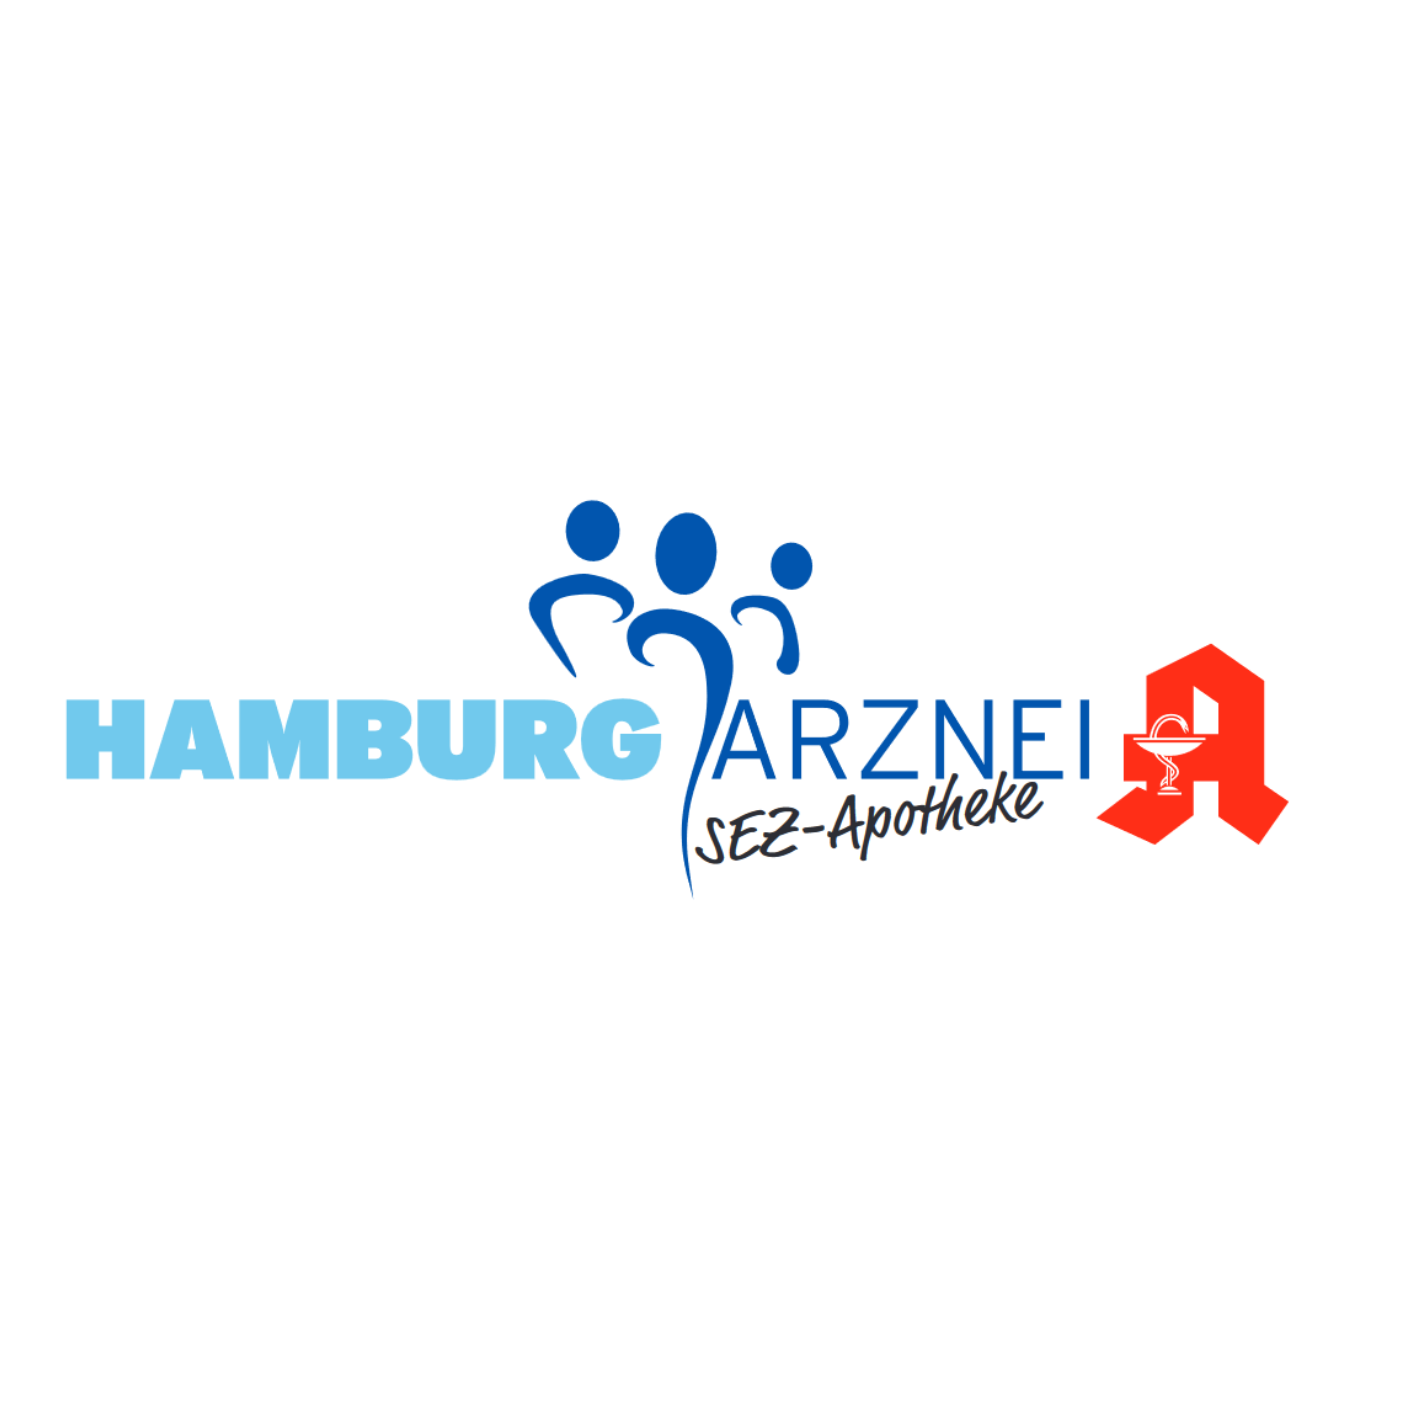 SEZ-Apotheke in Hamburg - Logo